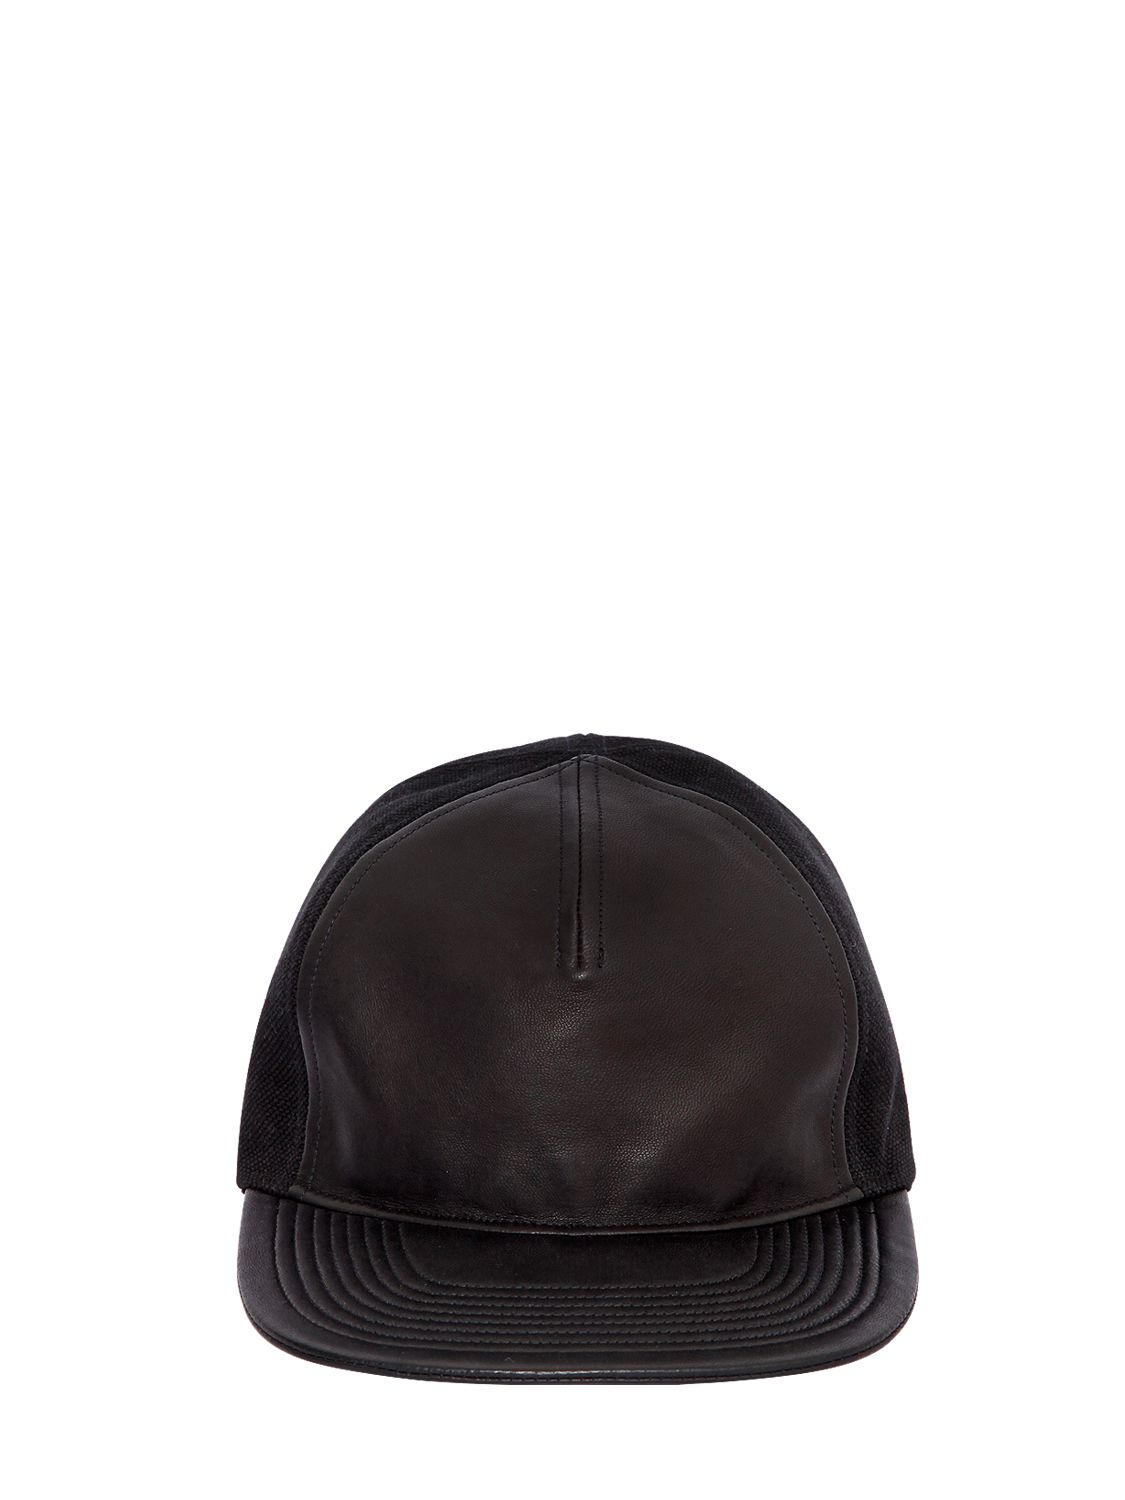 Balmain Nappa Leather & Canvas Baseball Hat in Black for Men | Lyst